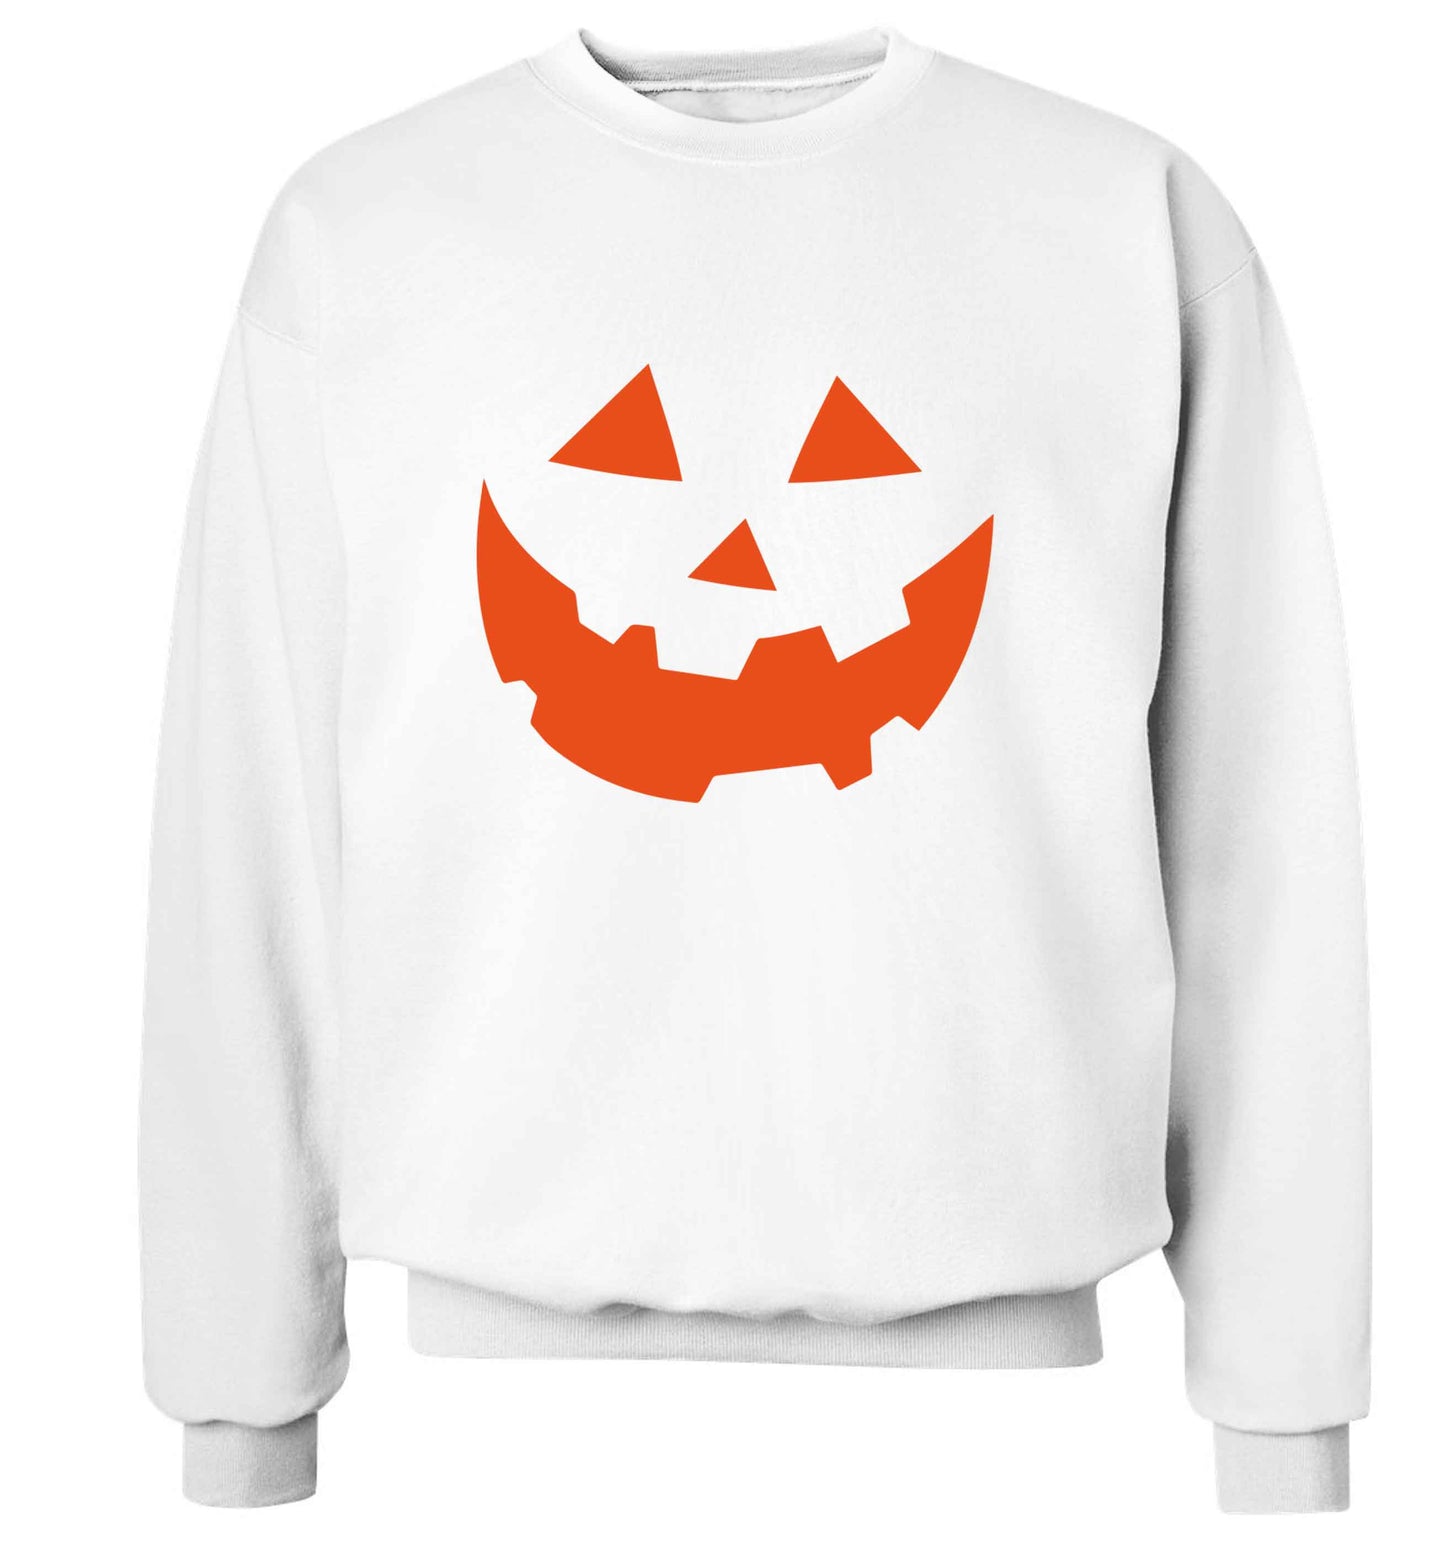 Pumpkin Spice Nice adult's unisex white sweater 2XL